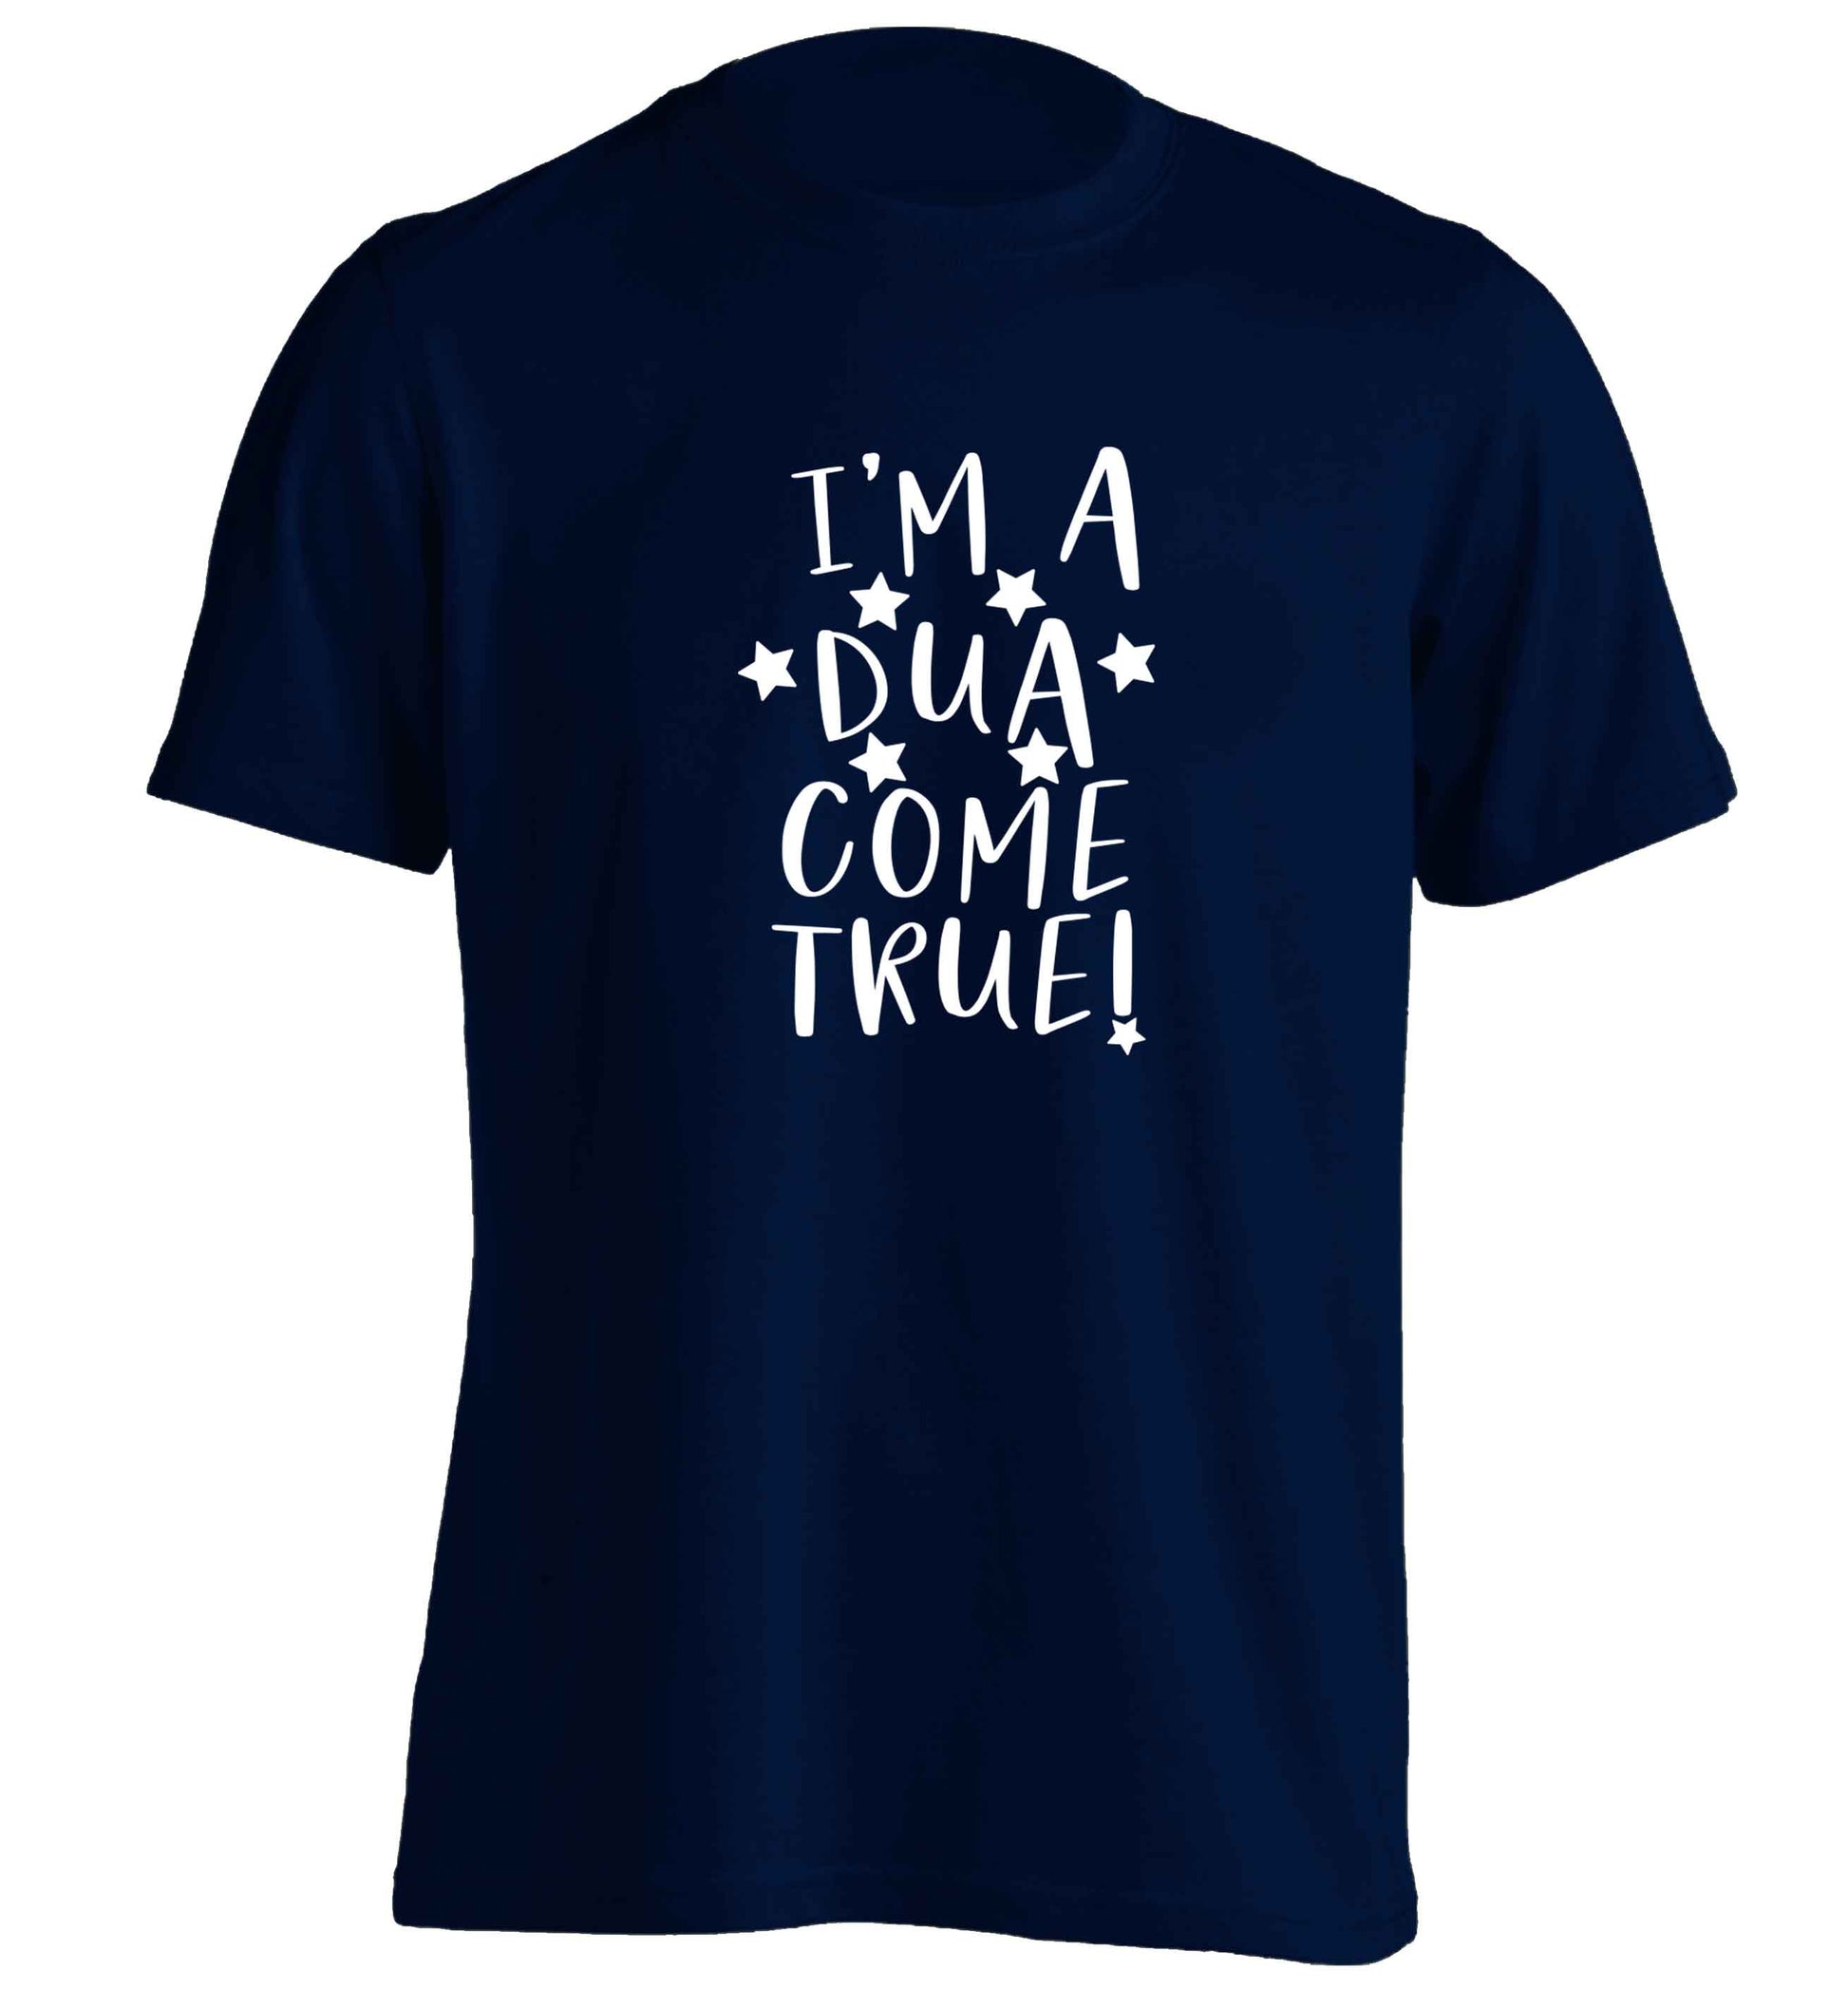 I'm a dua come true adults unisex navy Tshirt 2XL